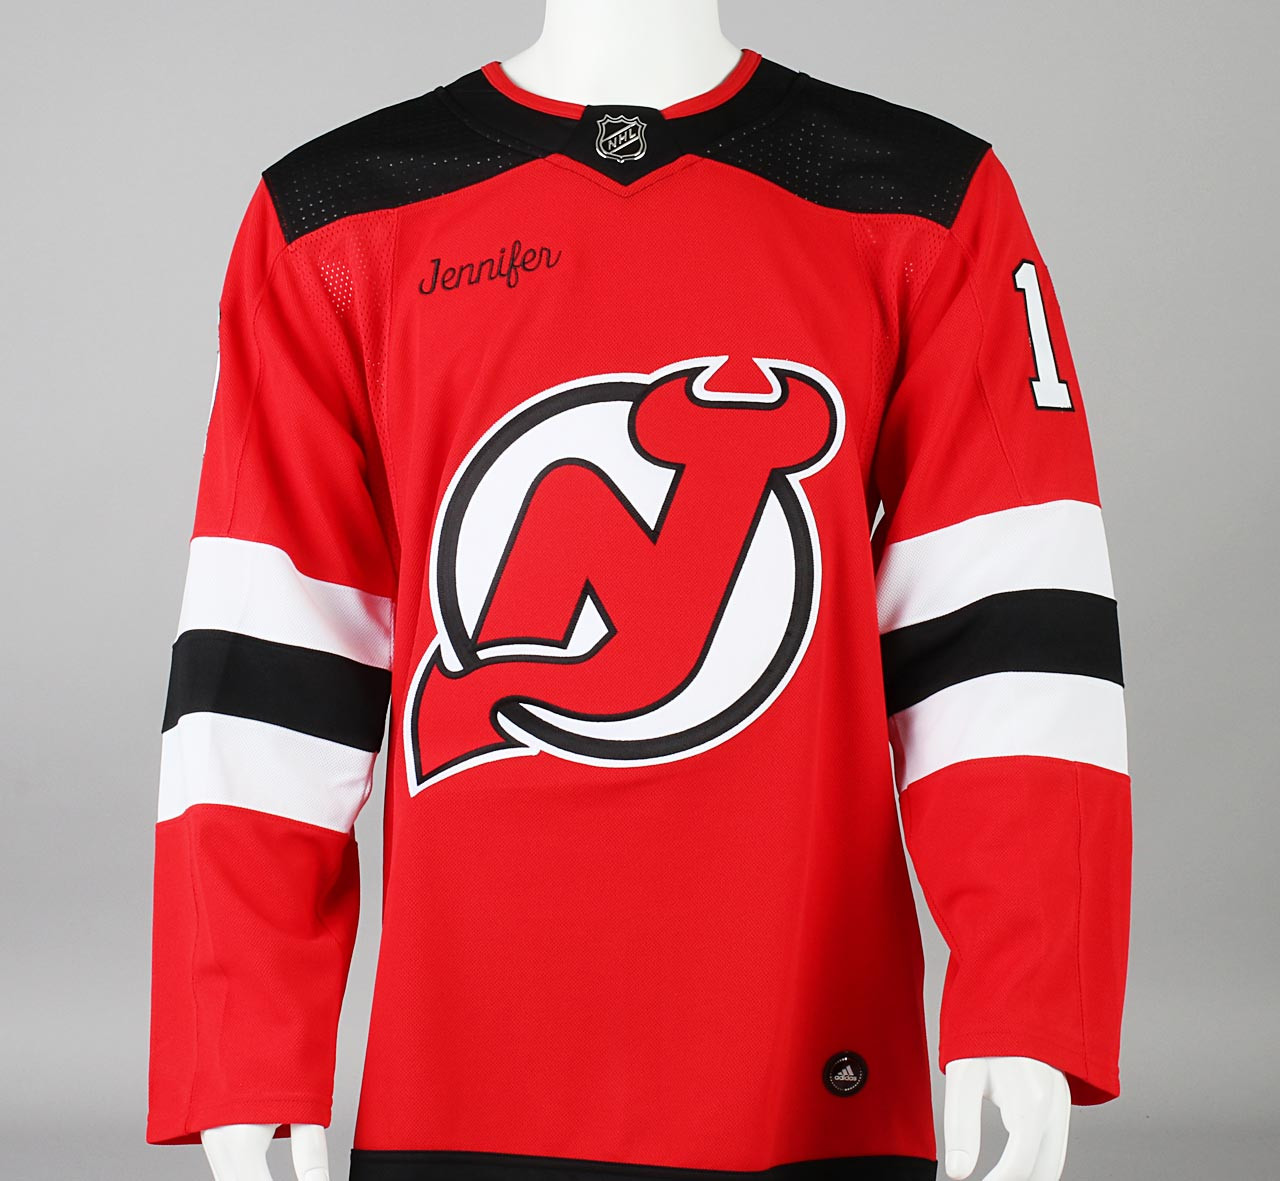 New Jersey Devils adidas Jerseys, Devils Hockey Jerseys, Authentic